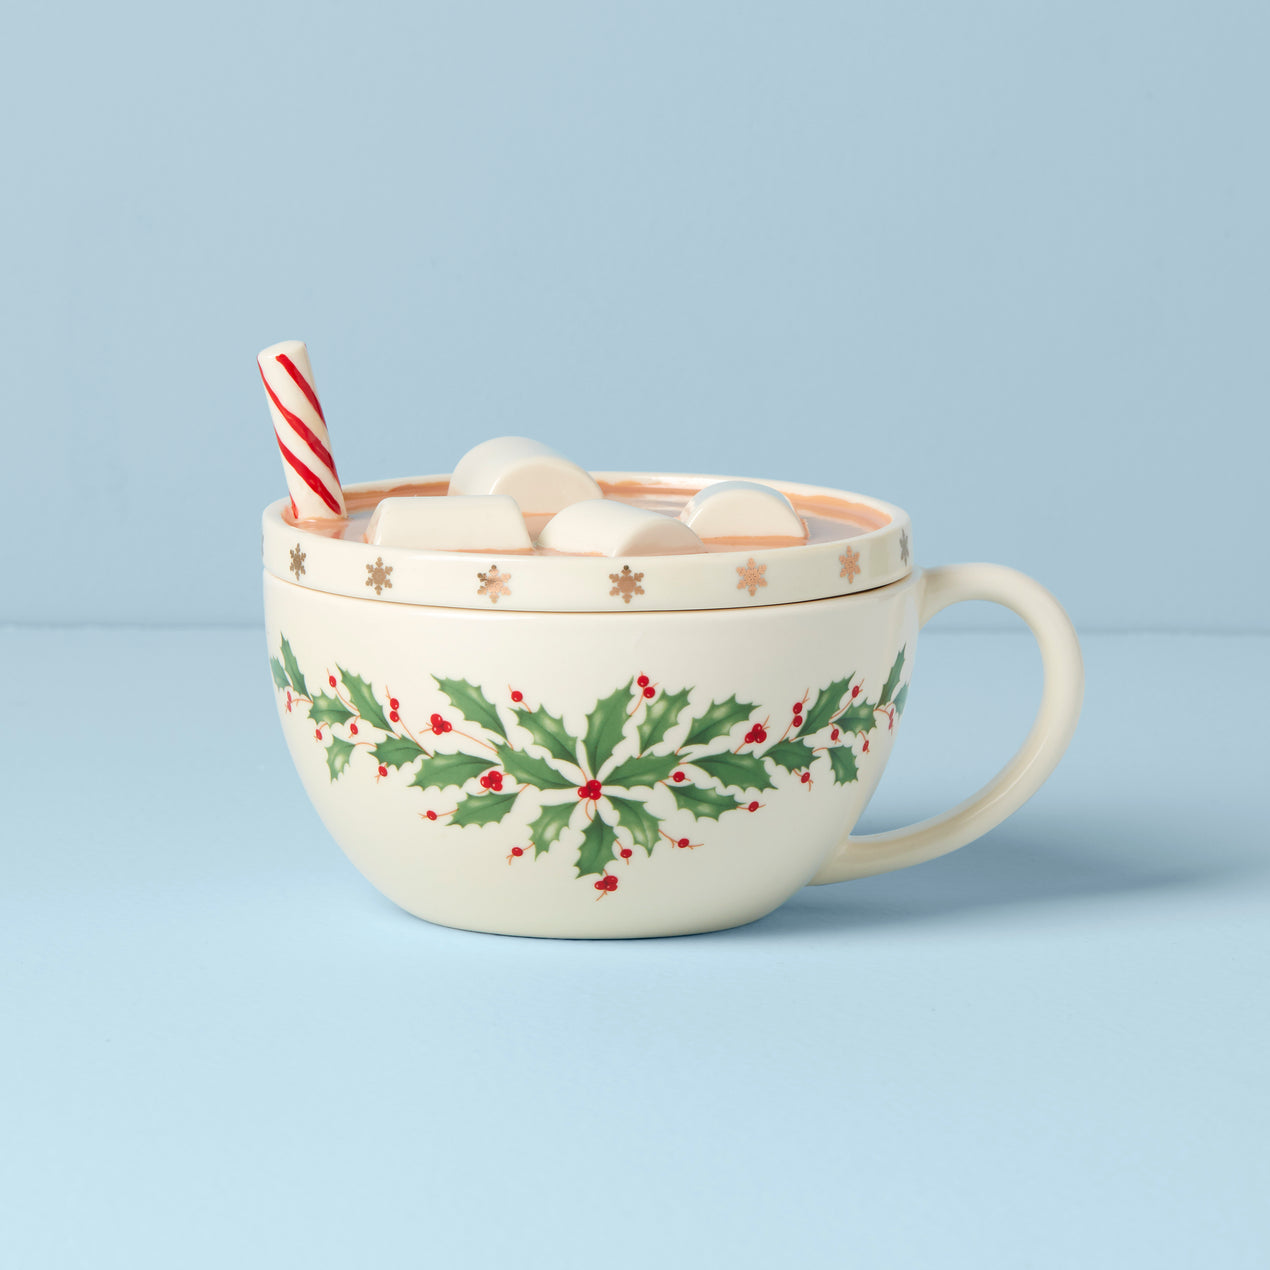 Candy Cane Personalized Glass Christmas Mugs